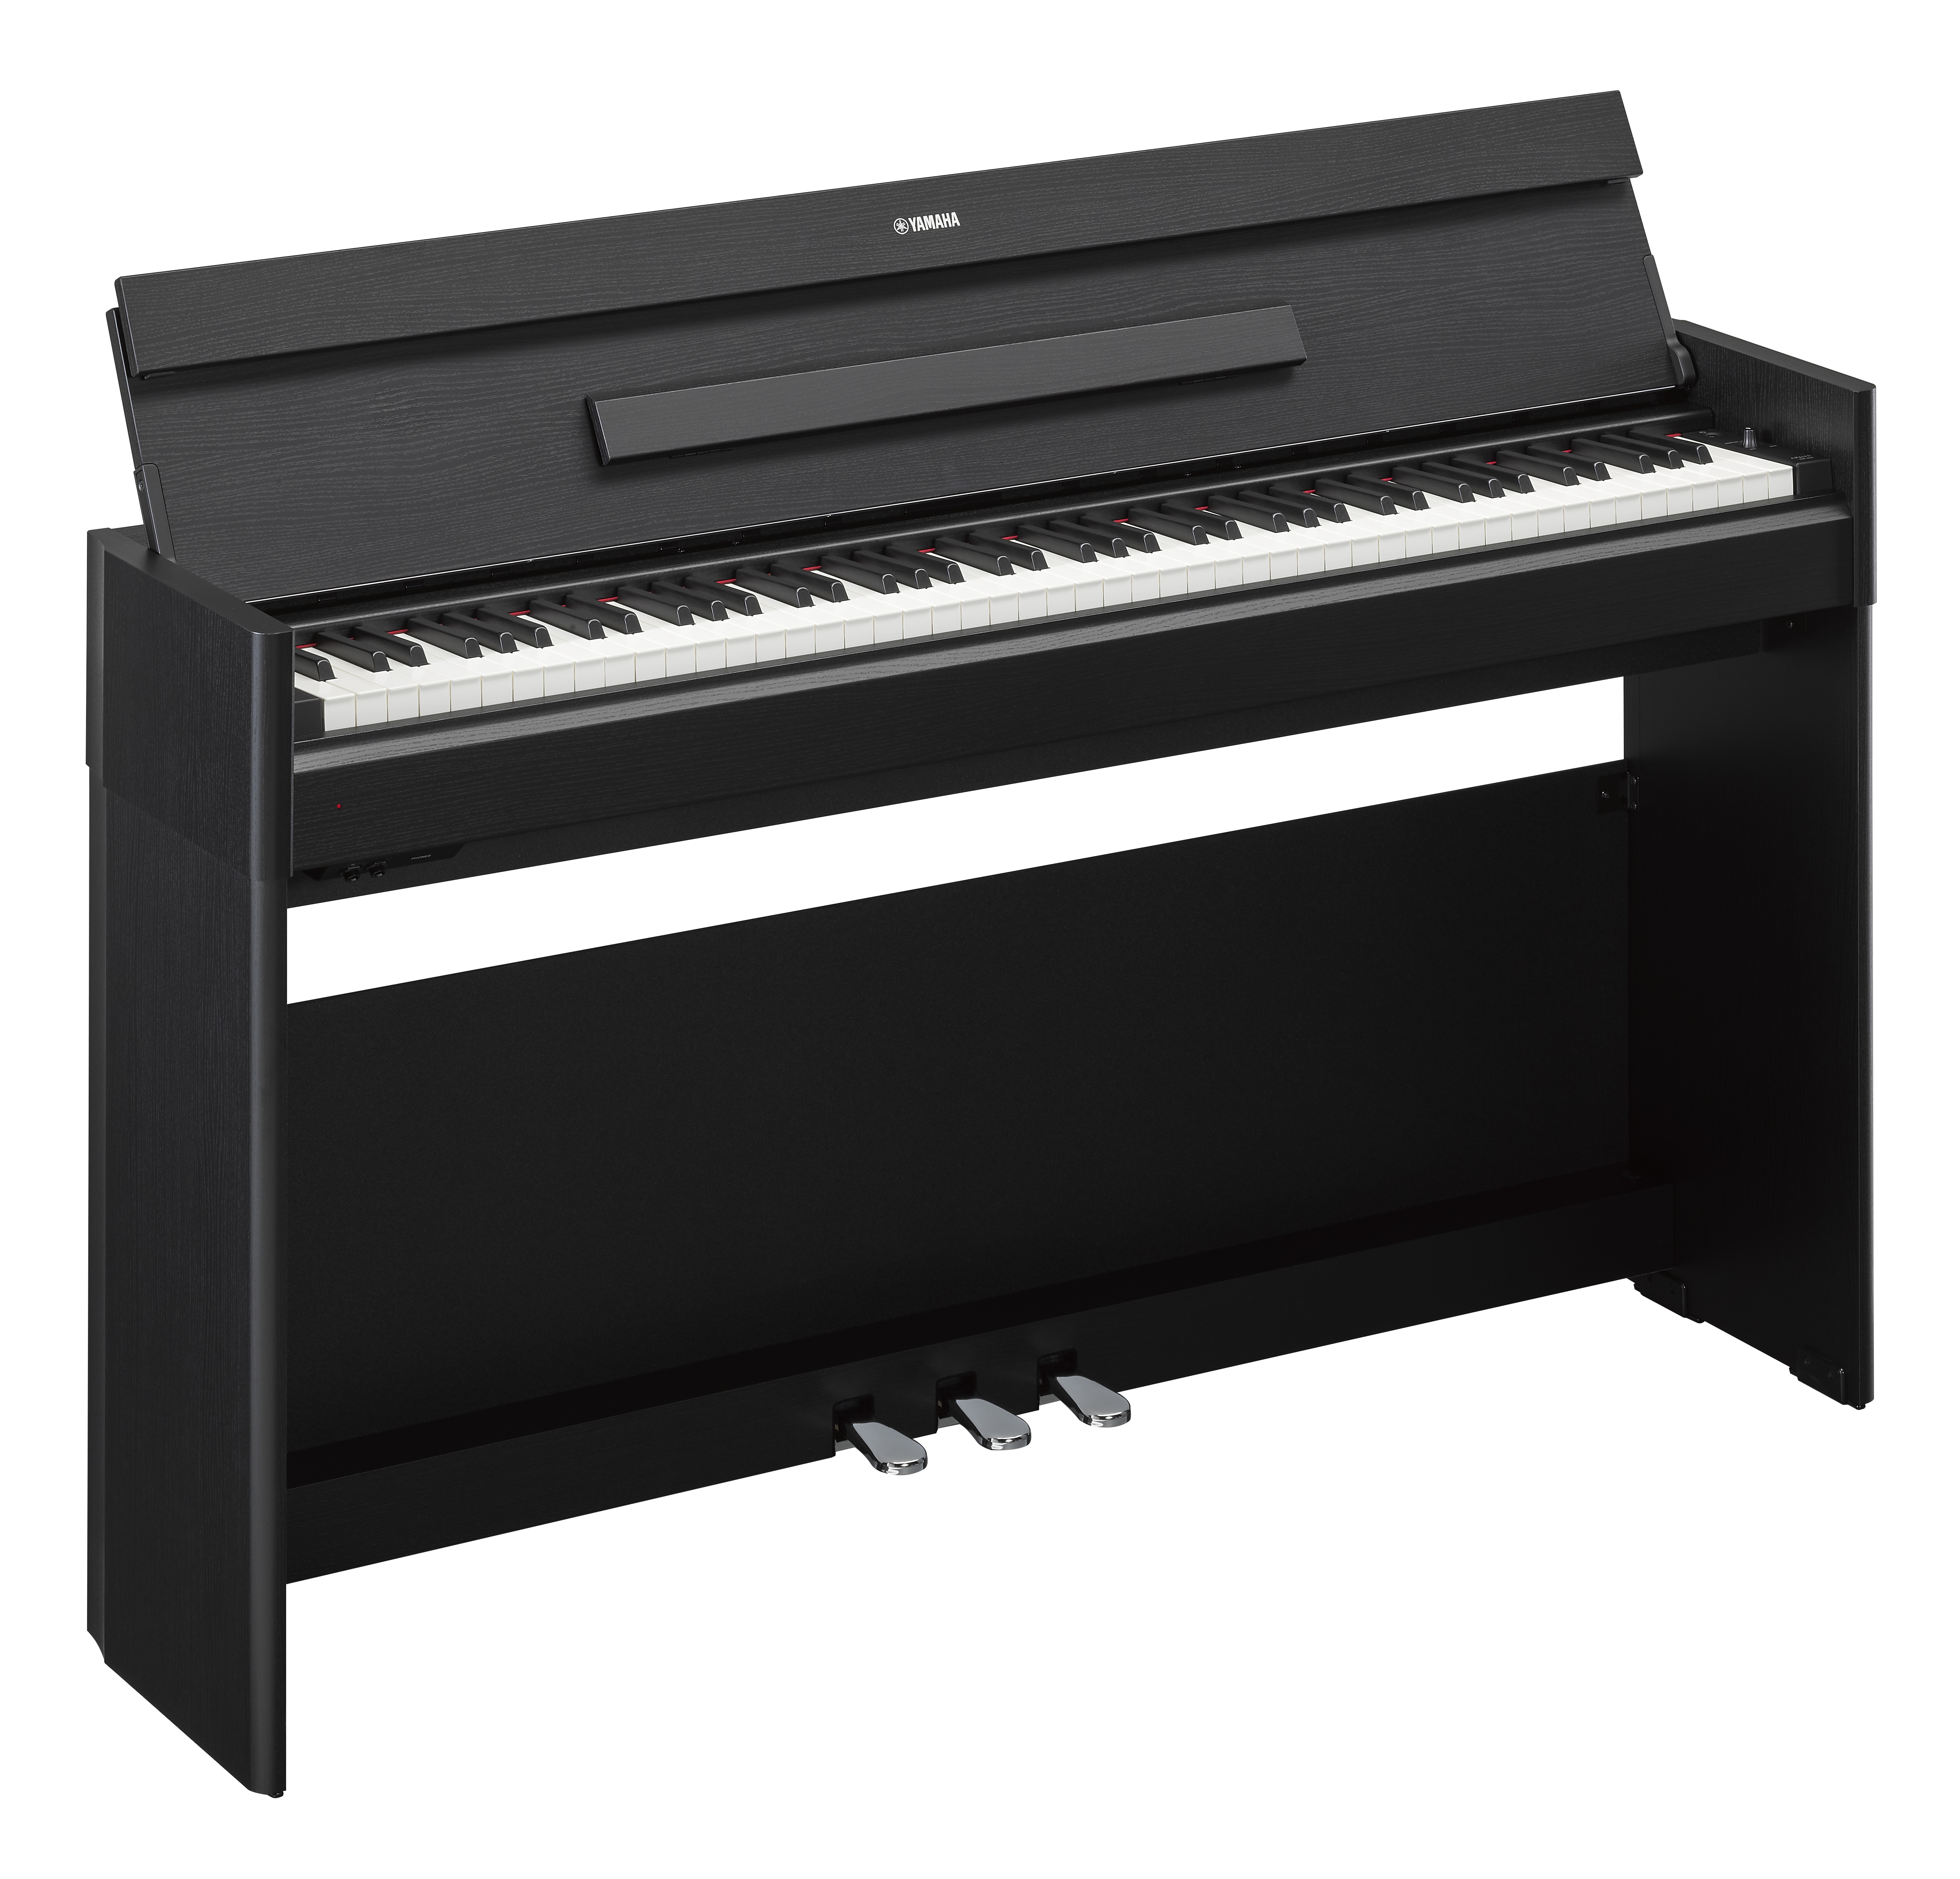 Yamaha Ydp-s54 - Black - Piano digital con mueble - Variation 1